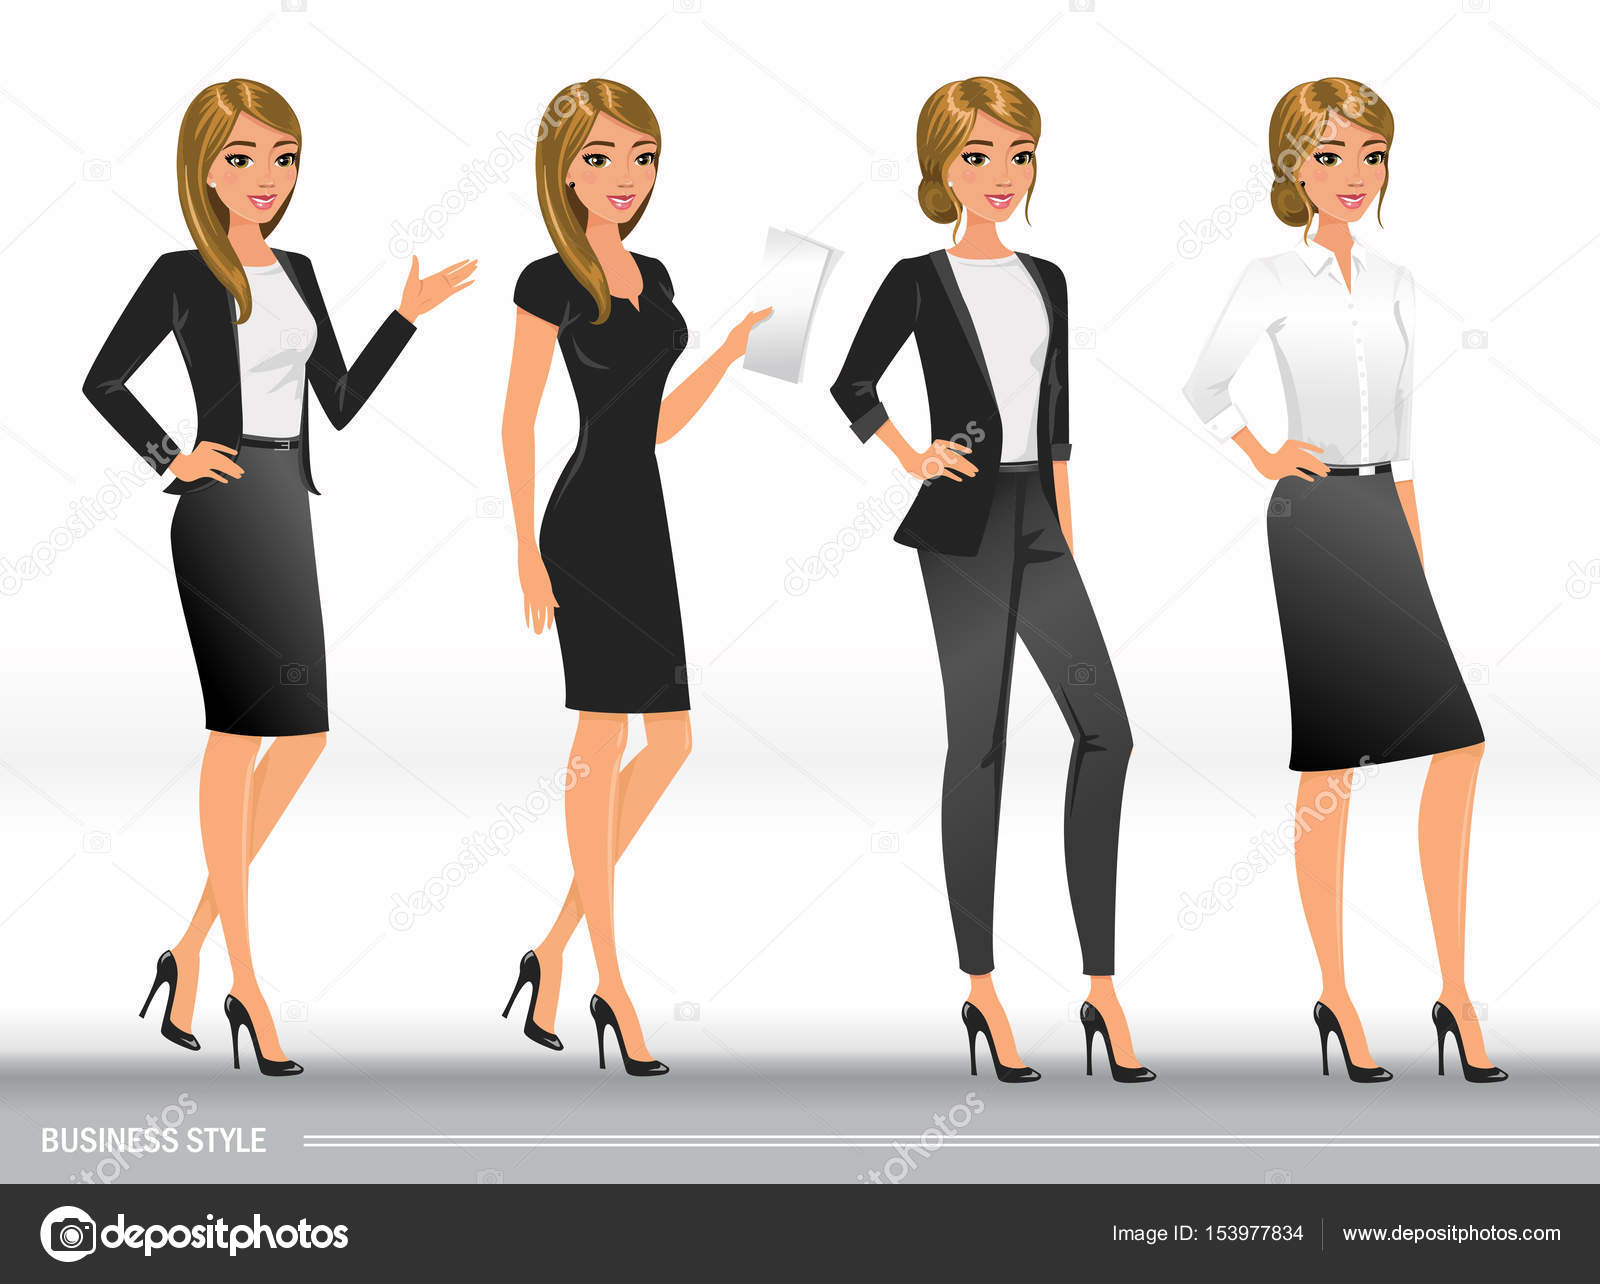 dress code formal female